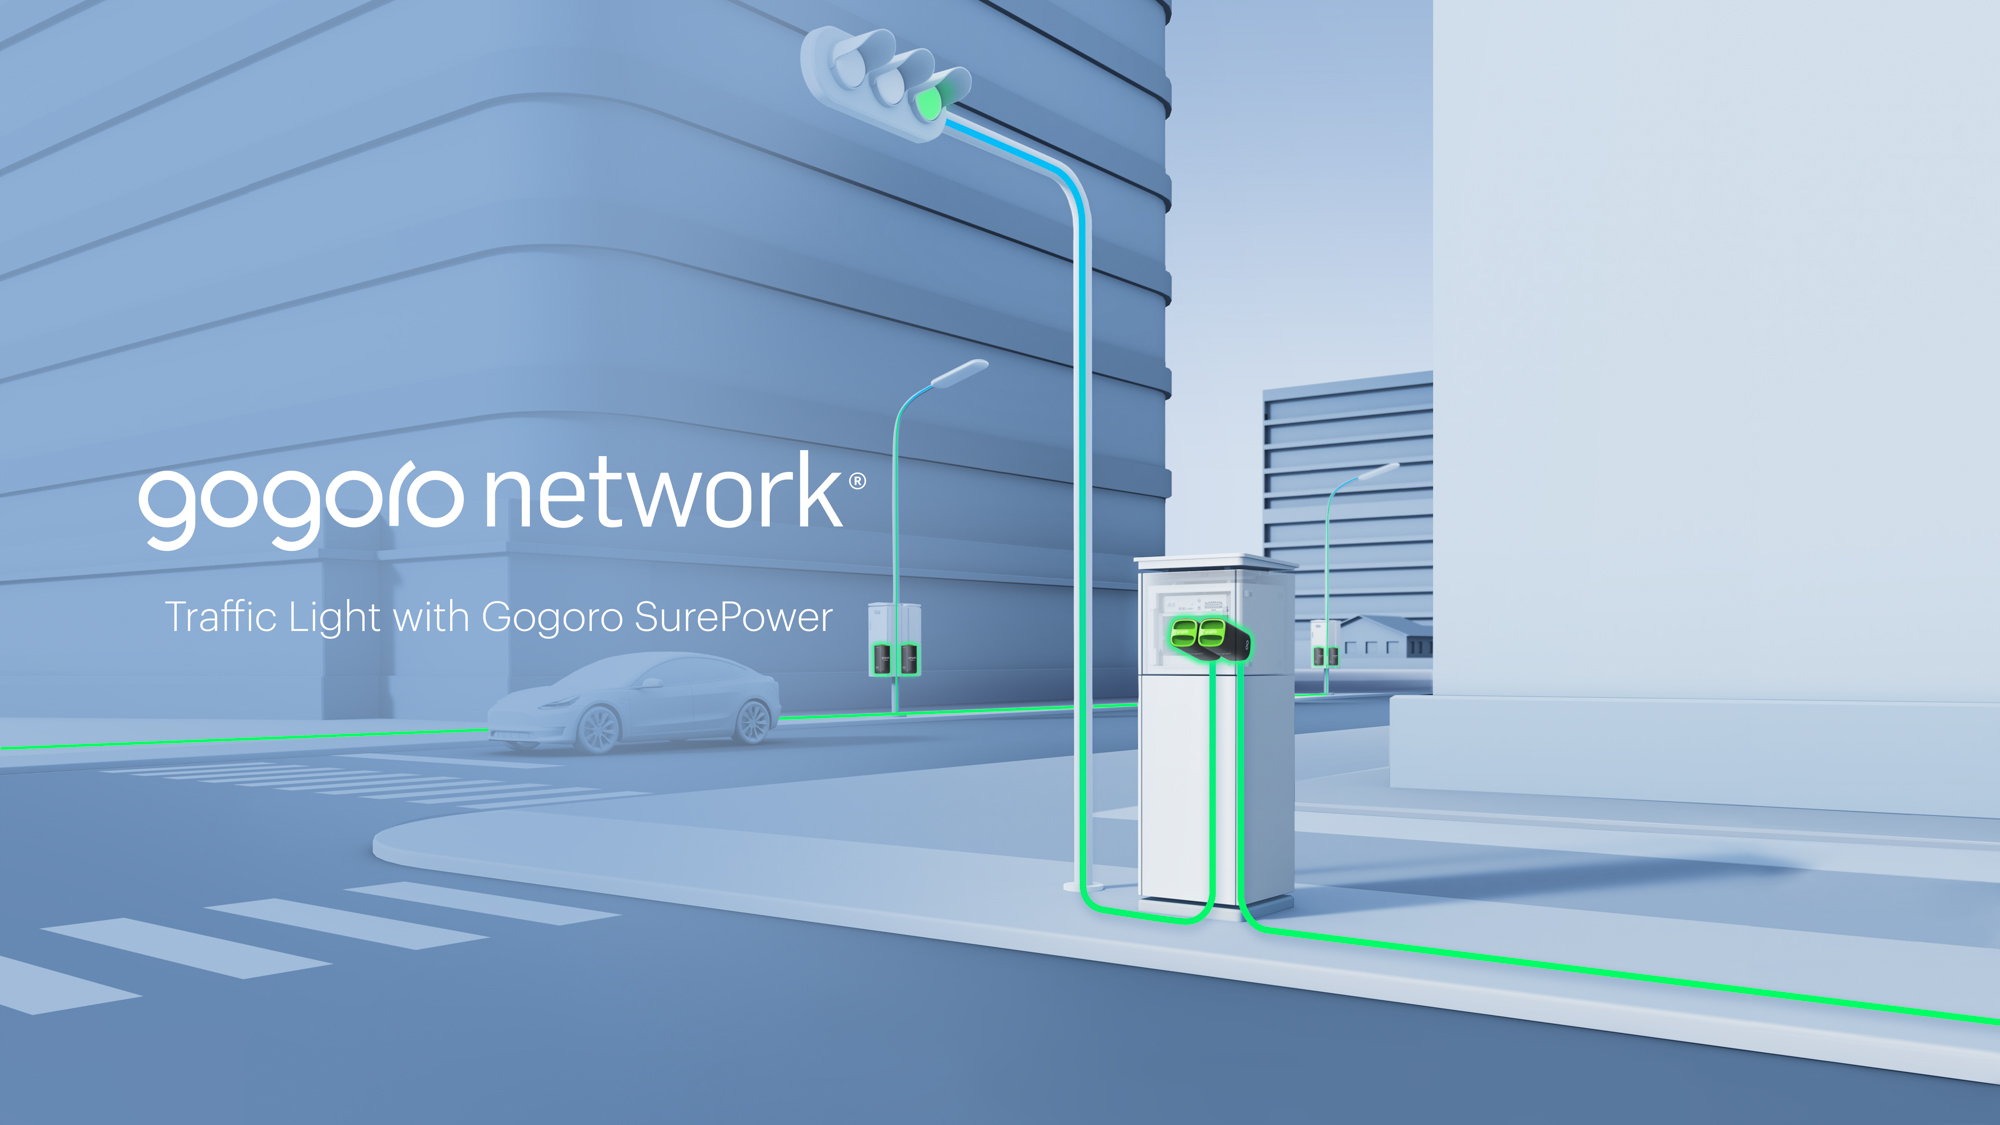 Gogoro Network 與遠傳電信合作建置智慧交通號誌不斷電系統